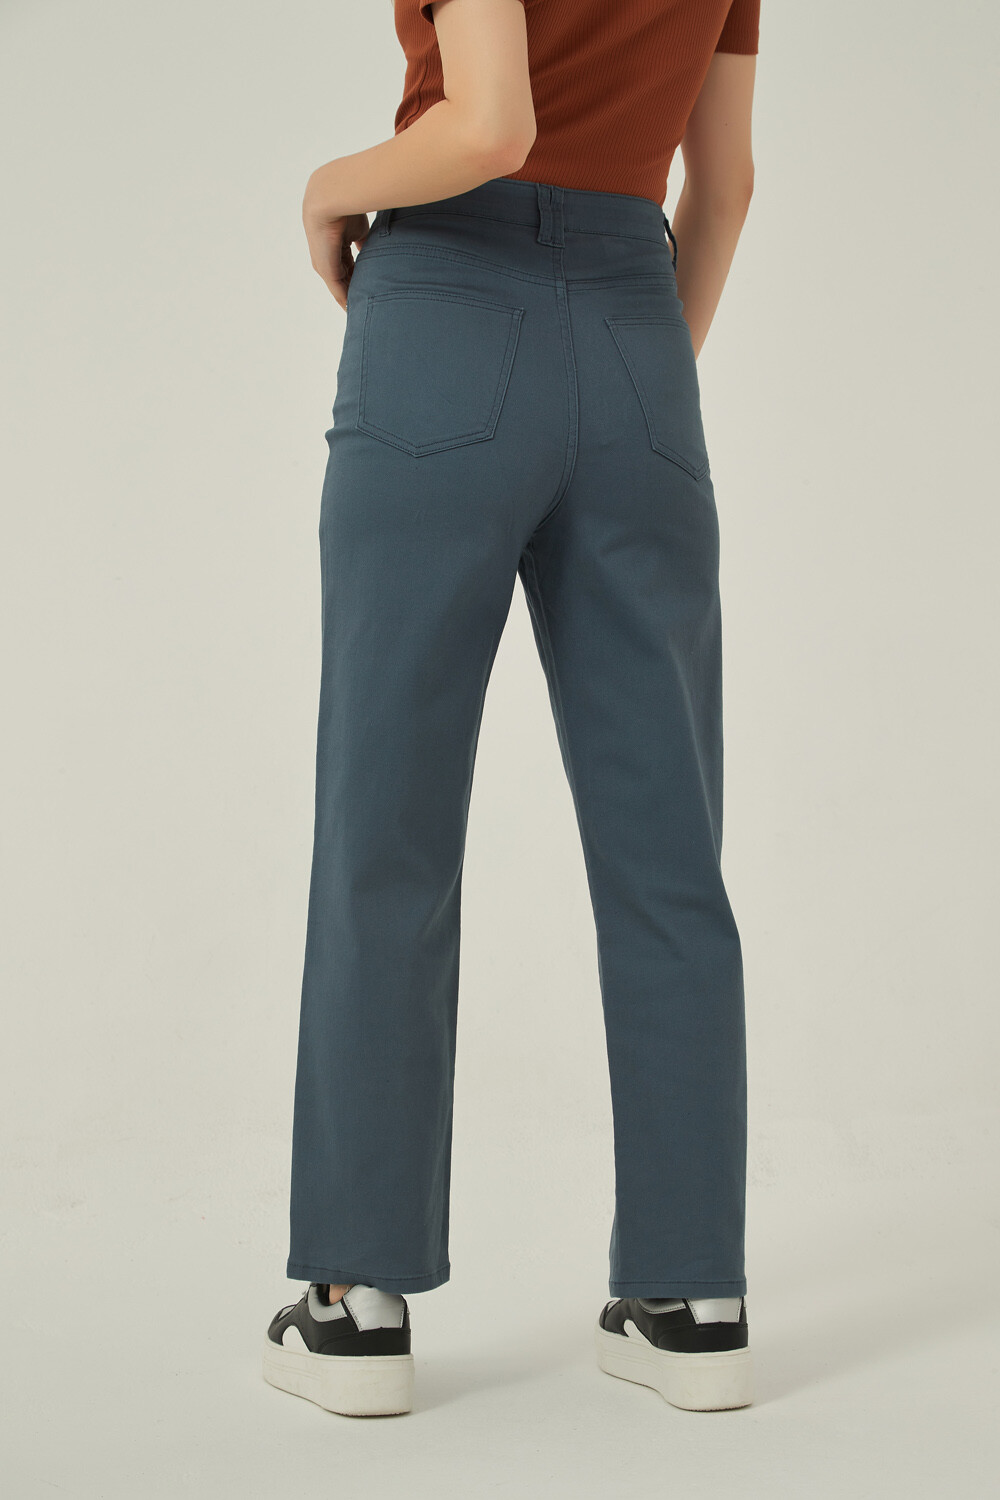 Pantalon Larac Azul Grisaceo